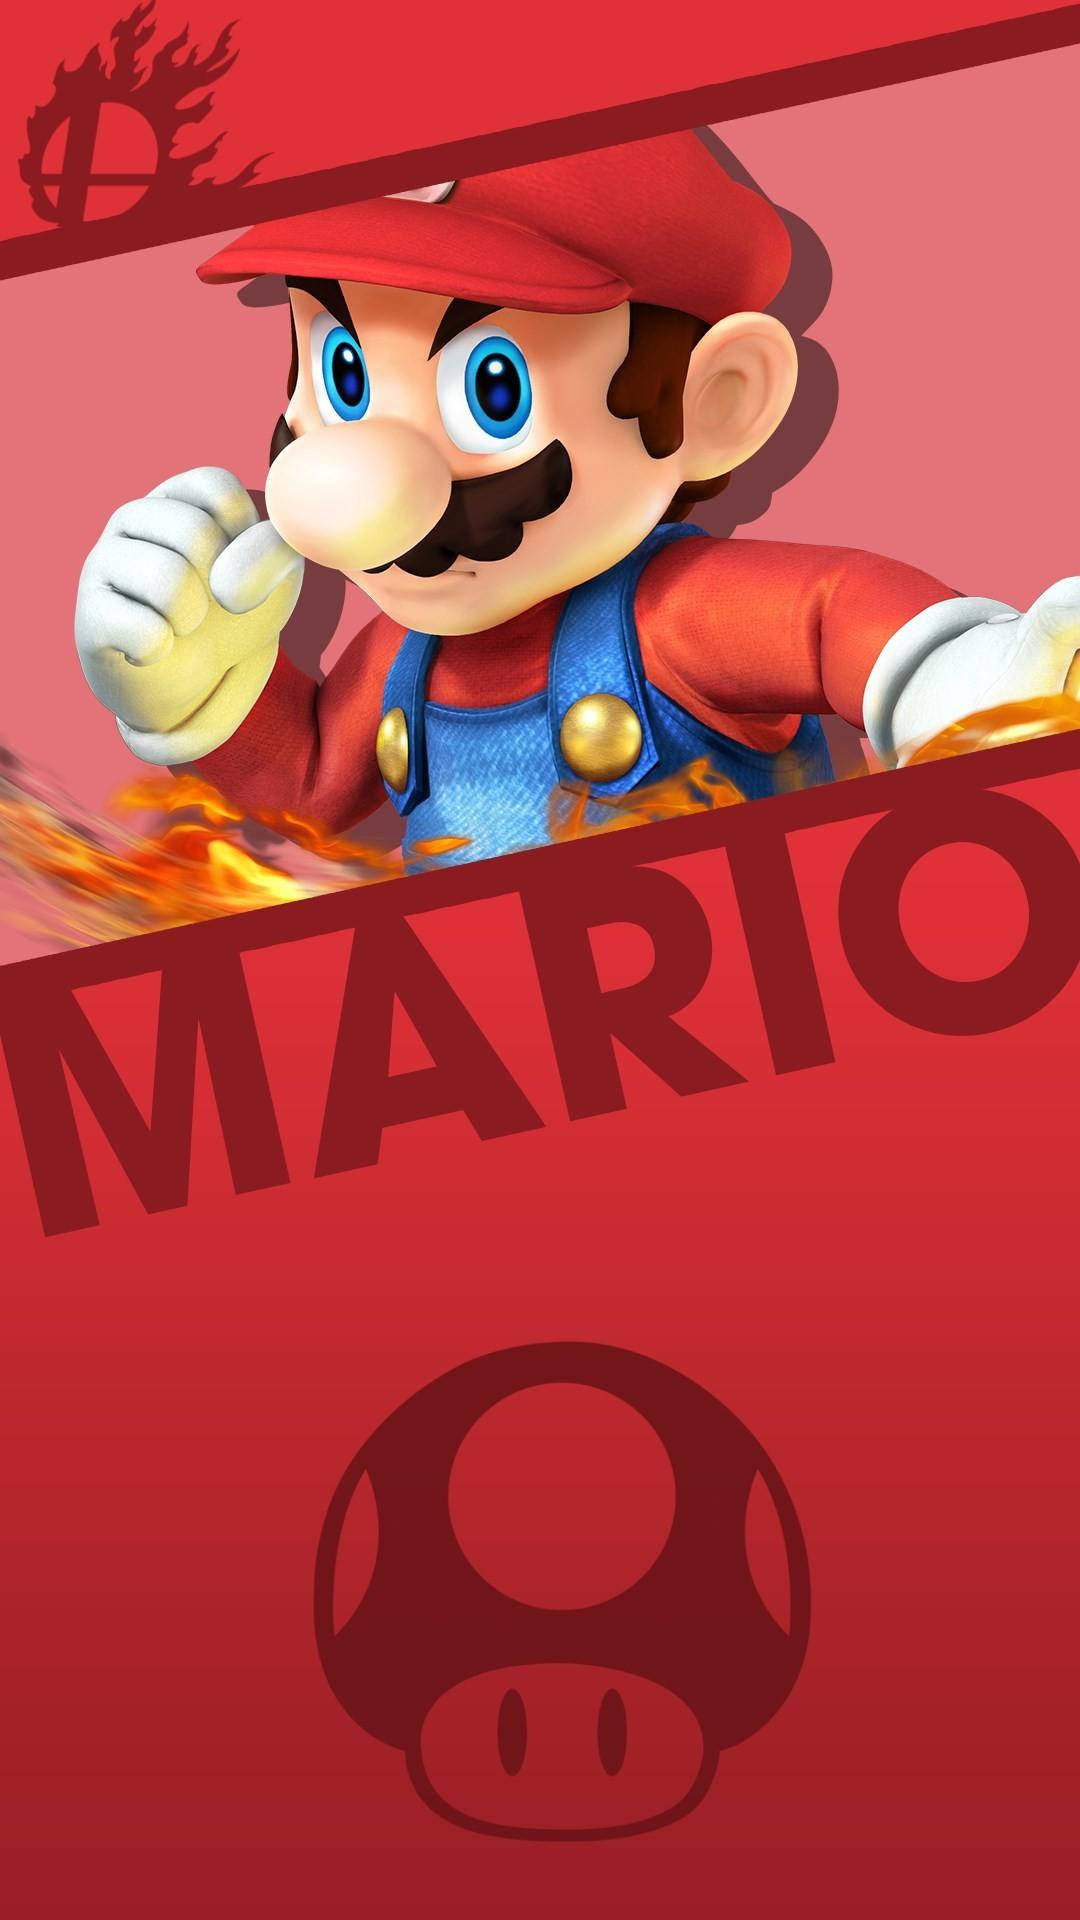 Mario Of Super Mario Bros Video Game Wallpaper